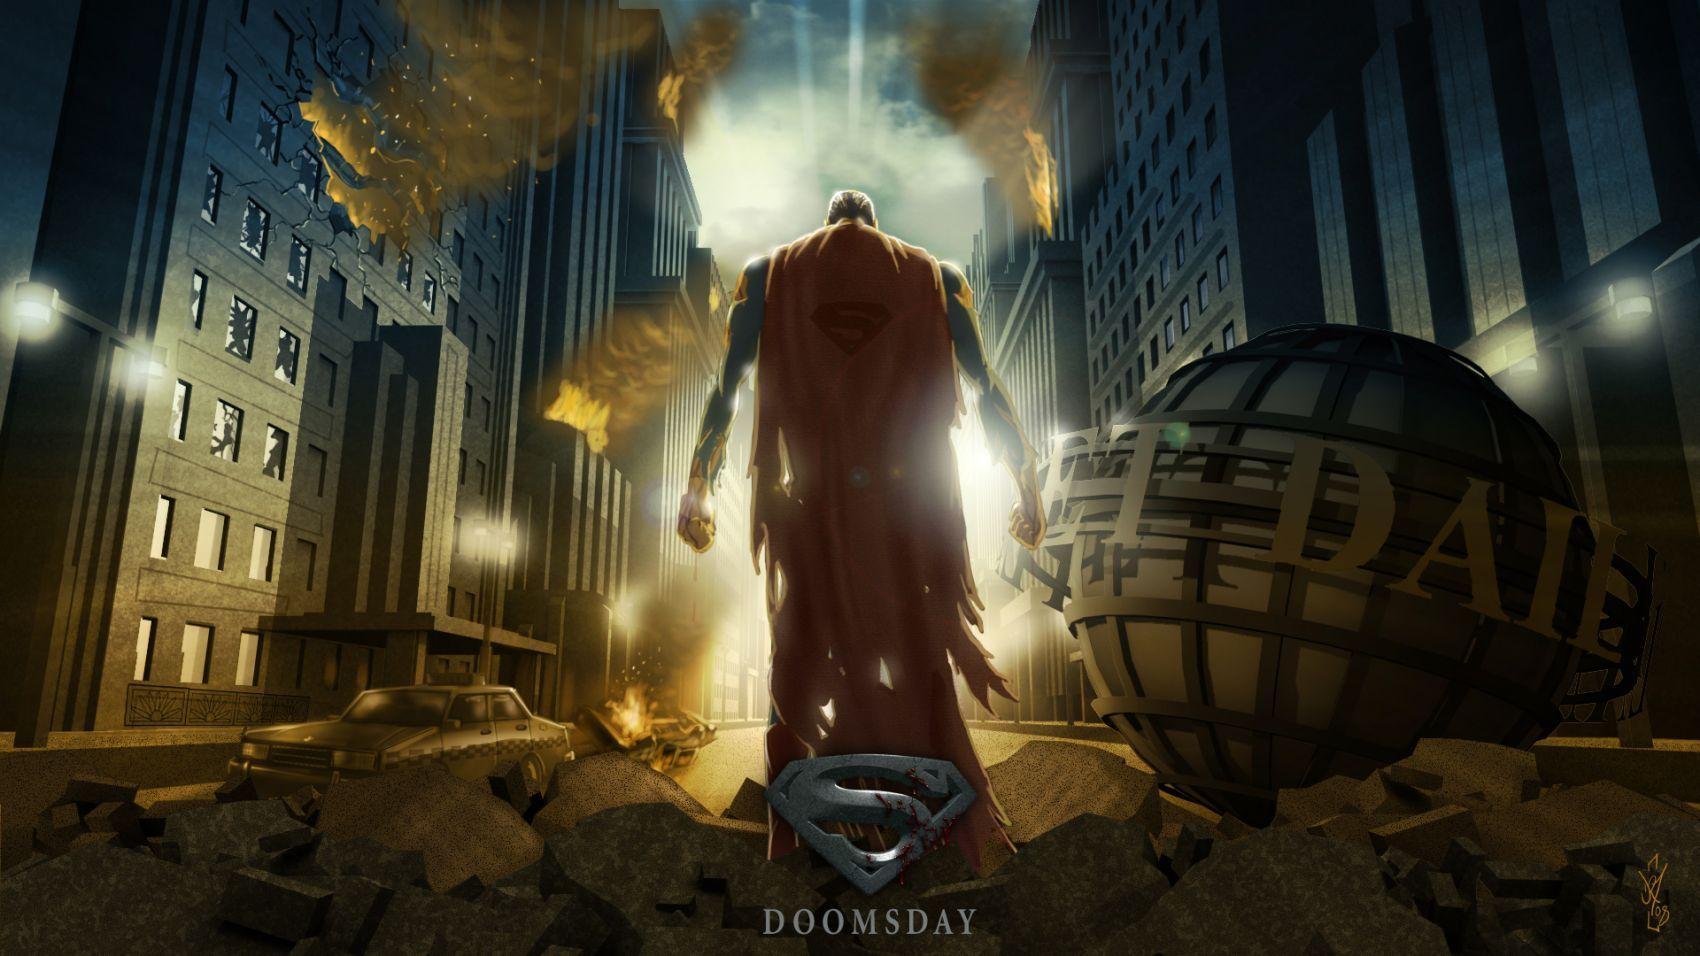 V.71: Doomsday Wallpaper, HD Image of Doomsday, Ultra HD 4K